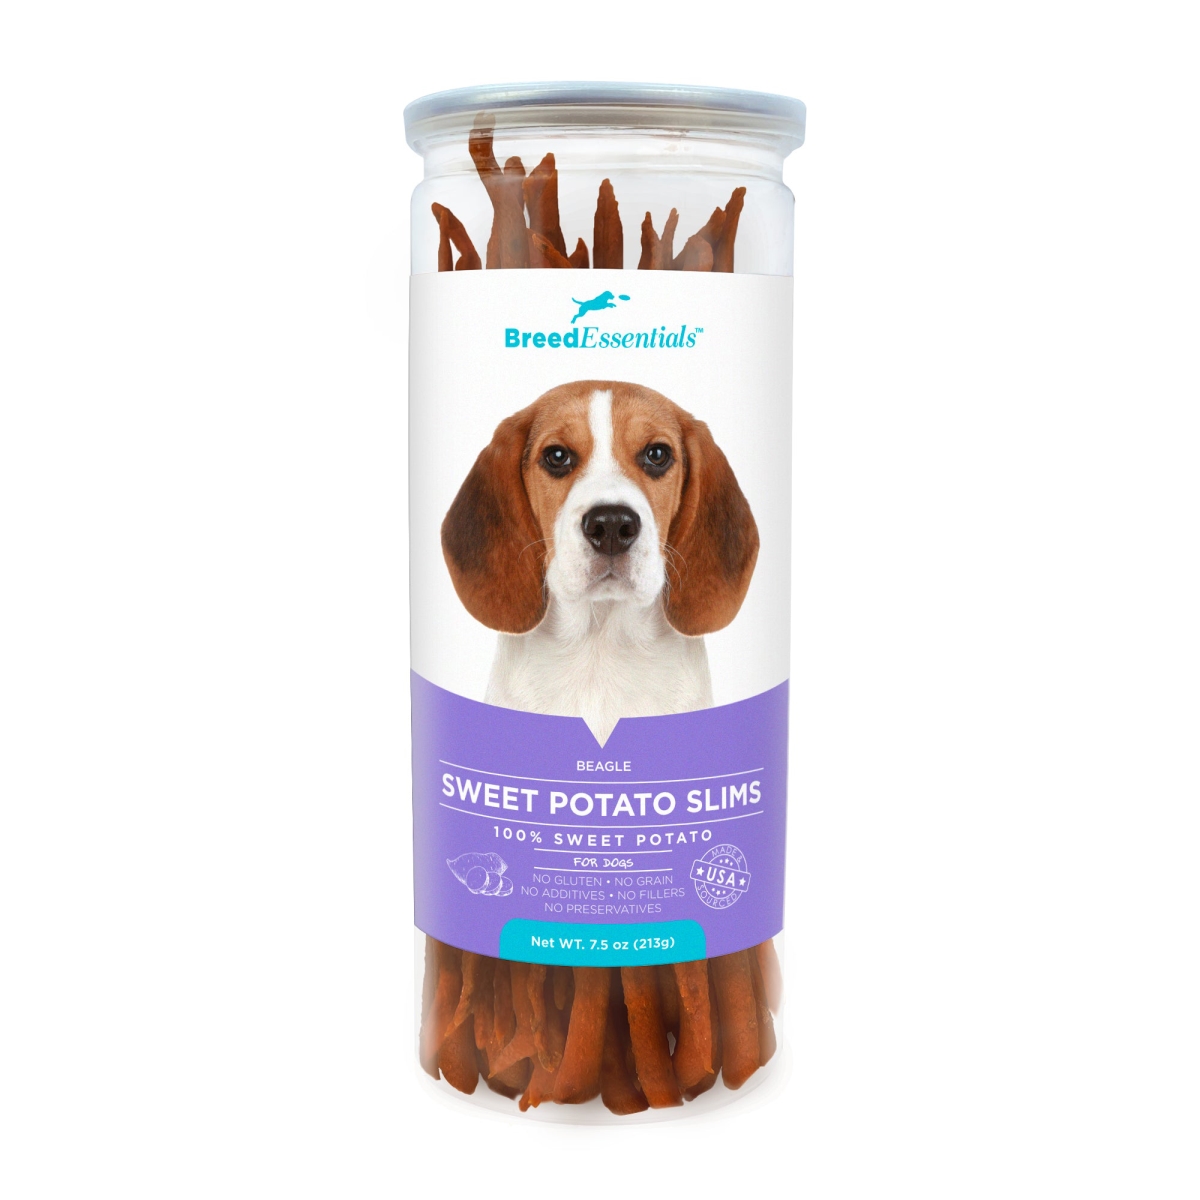 Picture of Breed Essentials 197247000105 7.5 oz Sweet Potato Slims - Beagle